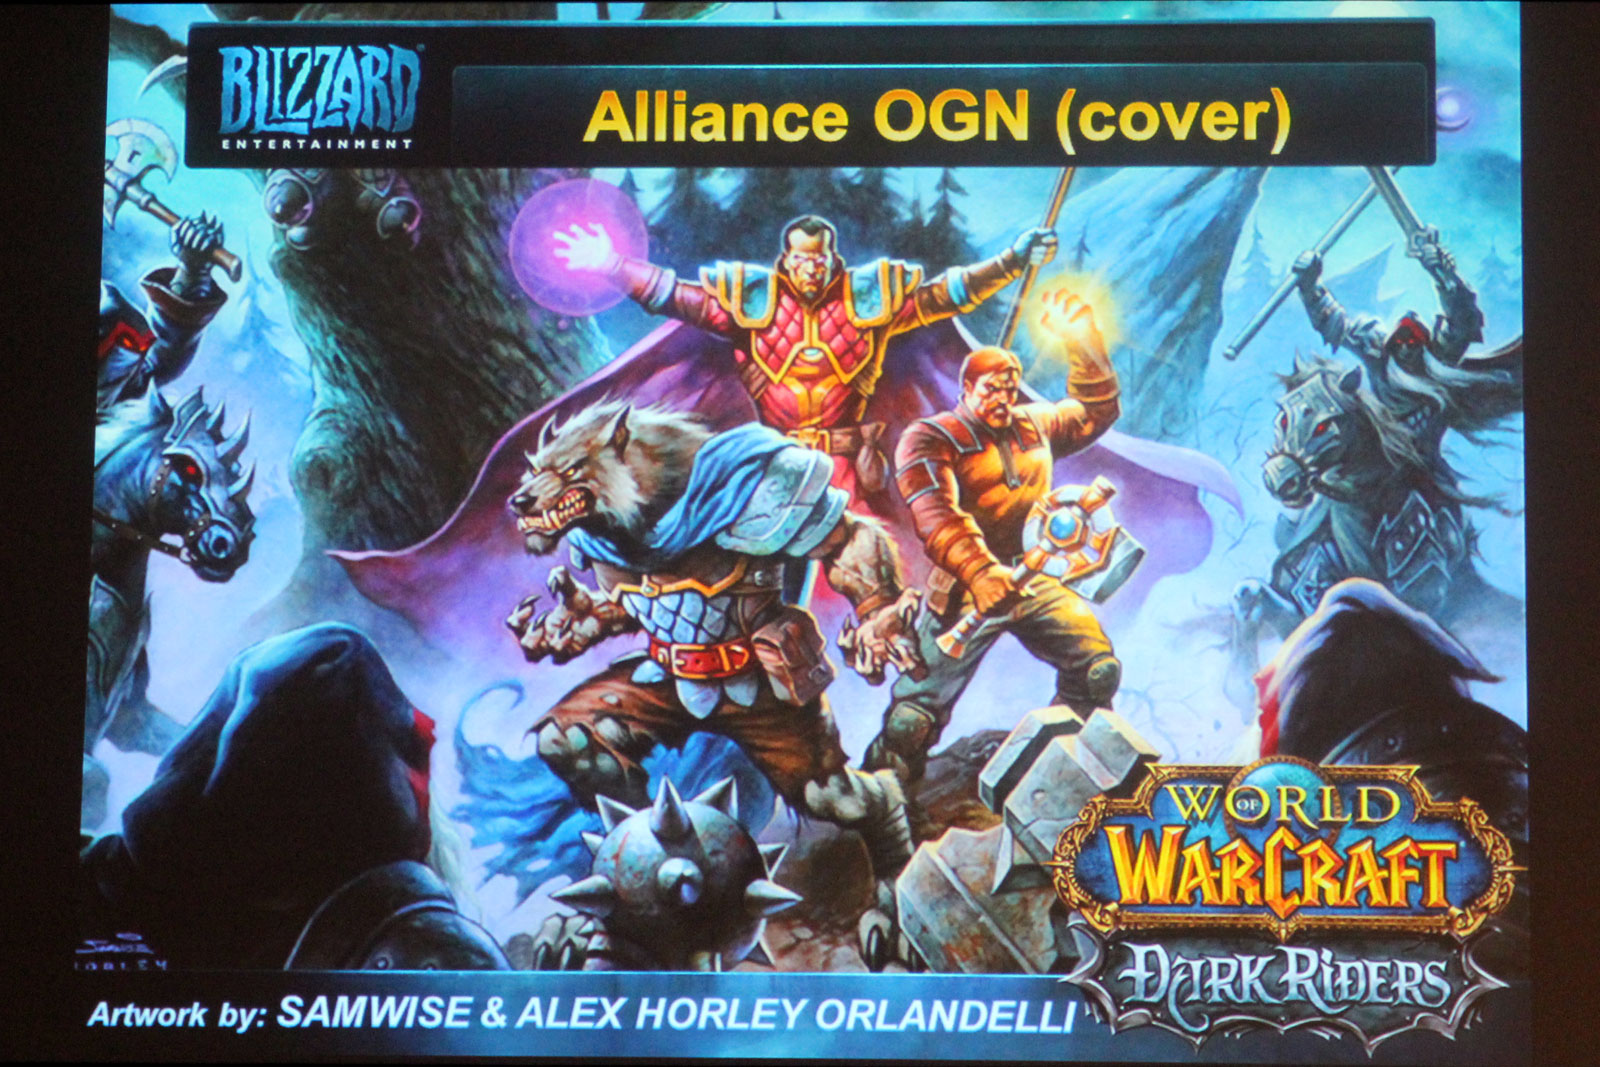 DC Comics World of Warcraft Graphic Novels Still in Development